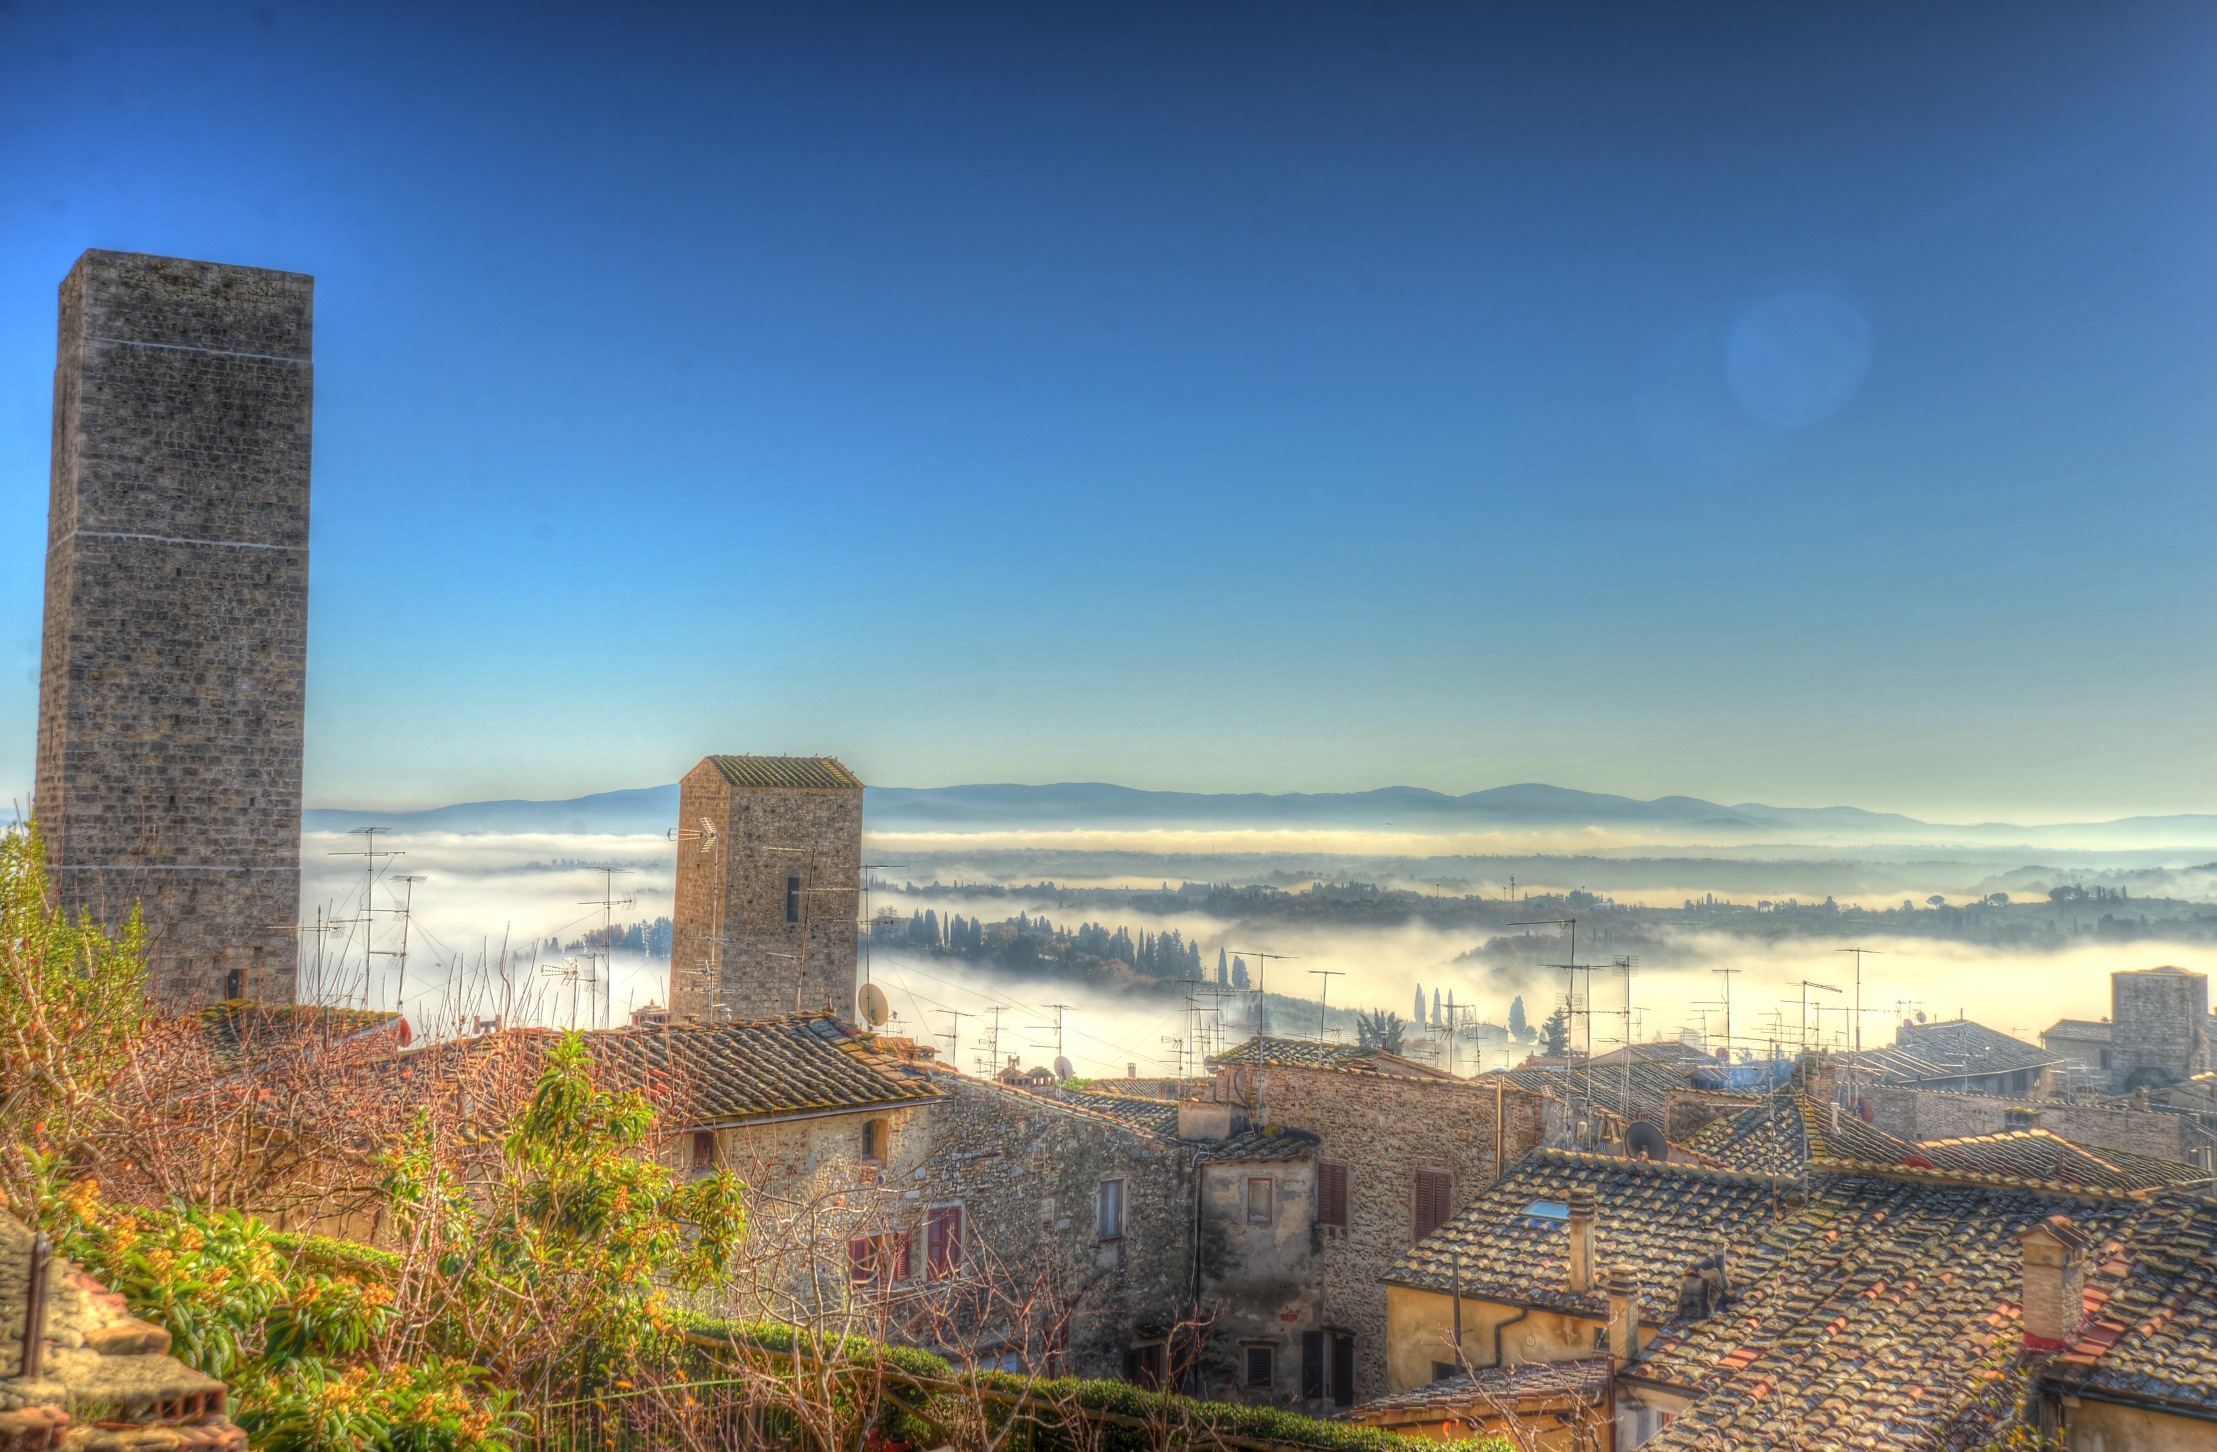 Morning fog around San Gimignano, classic tuscan landscape